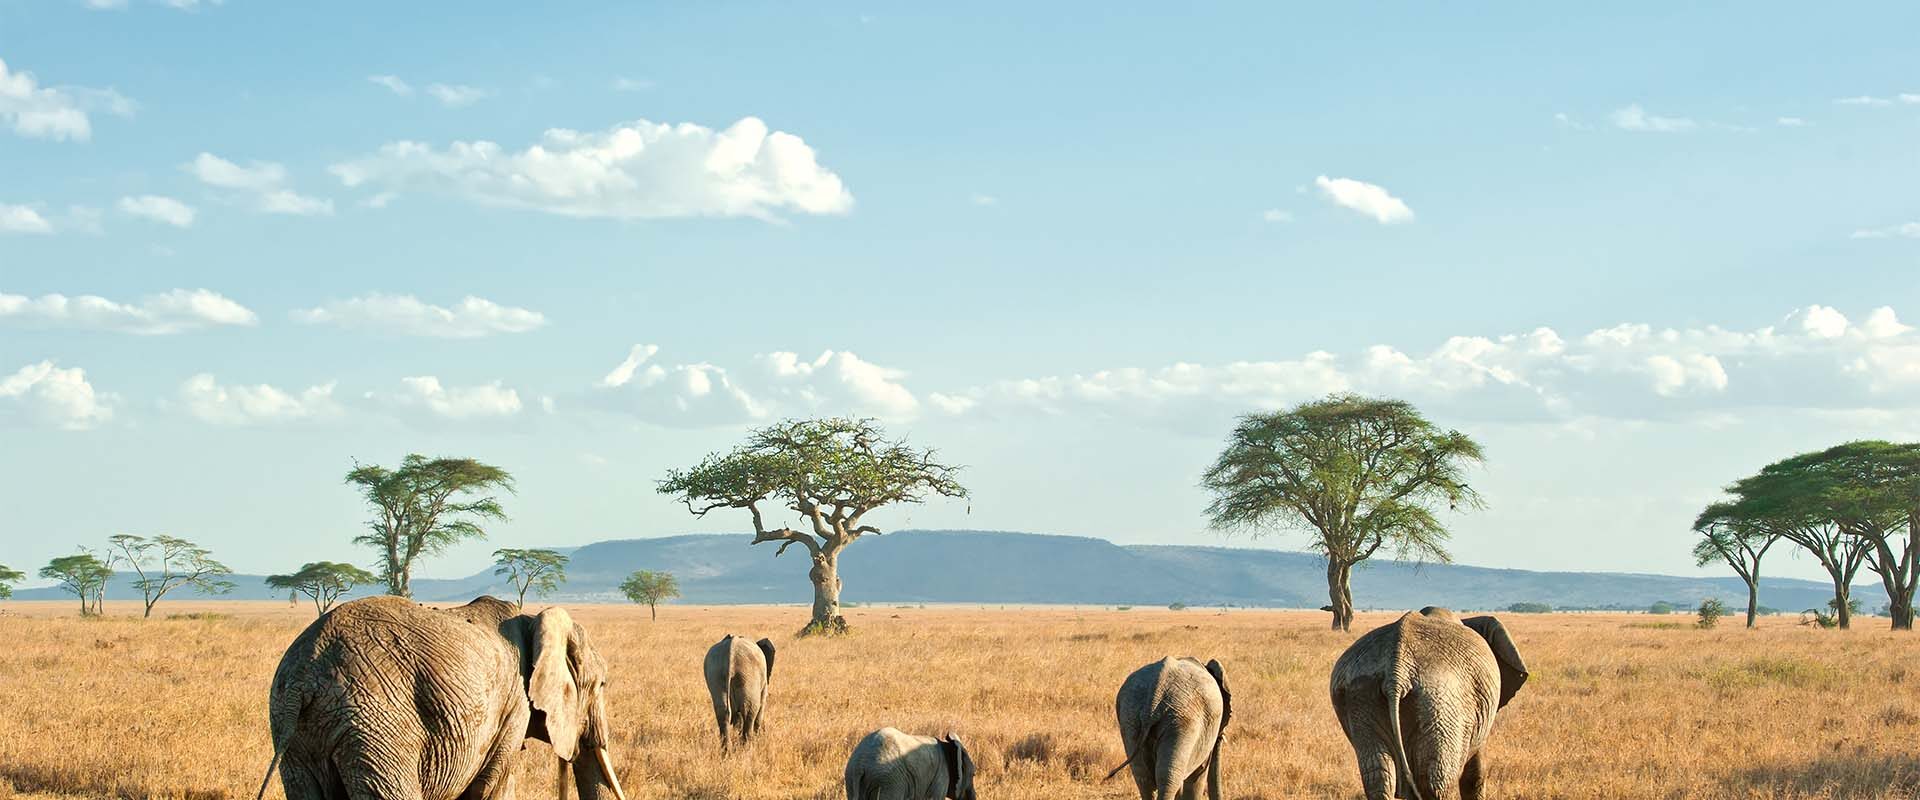 Familie olifanten in Tanzania